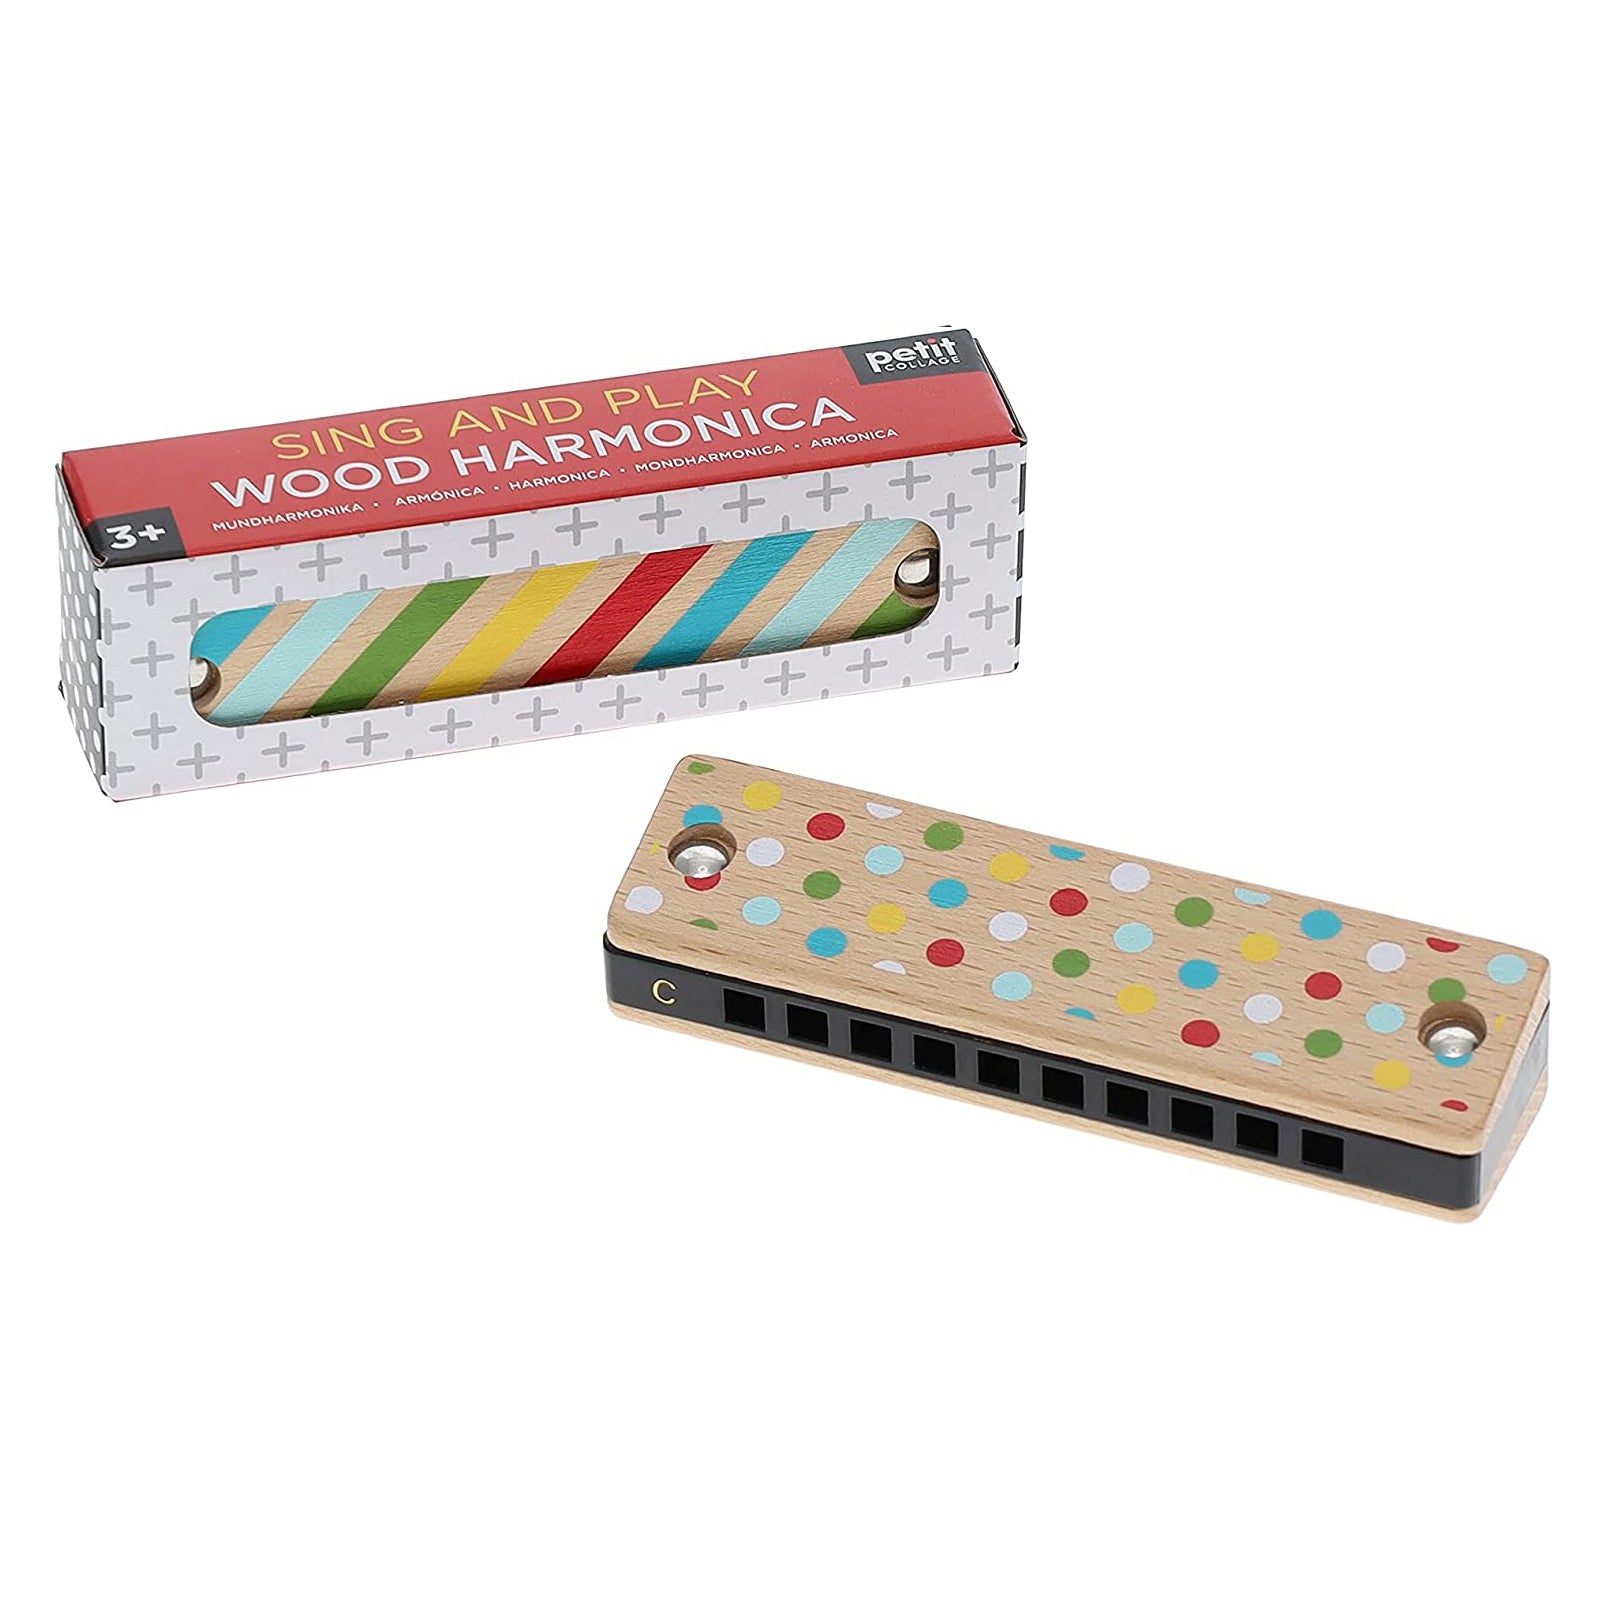 Petit Collage wooden harmonica